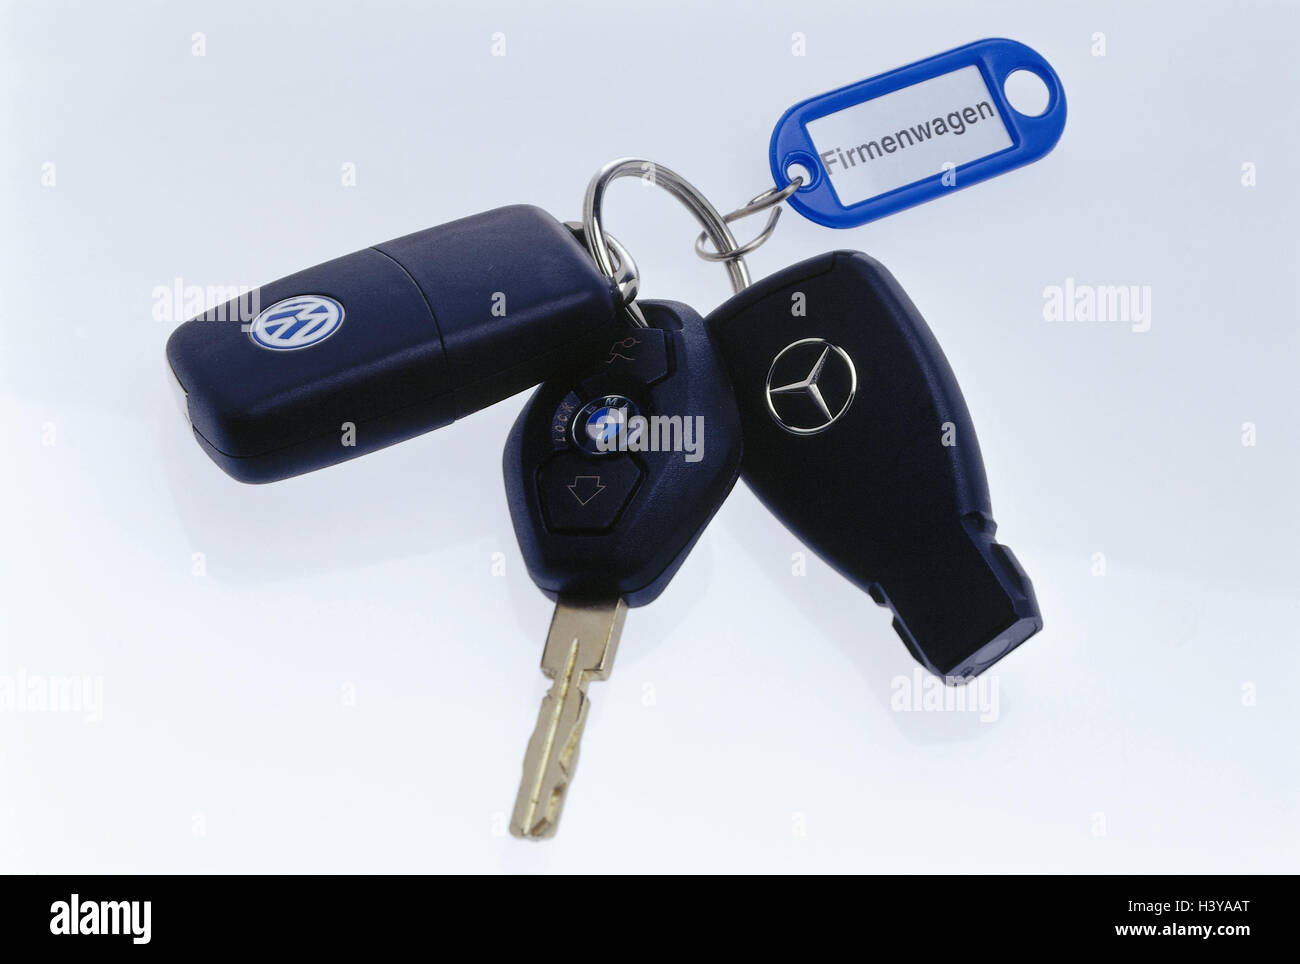 Auto Schlüssel, BMW 5er Reihe, 7. Reihe, Mercedes E-Klasse